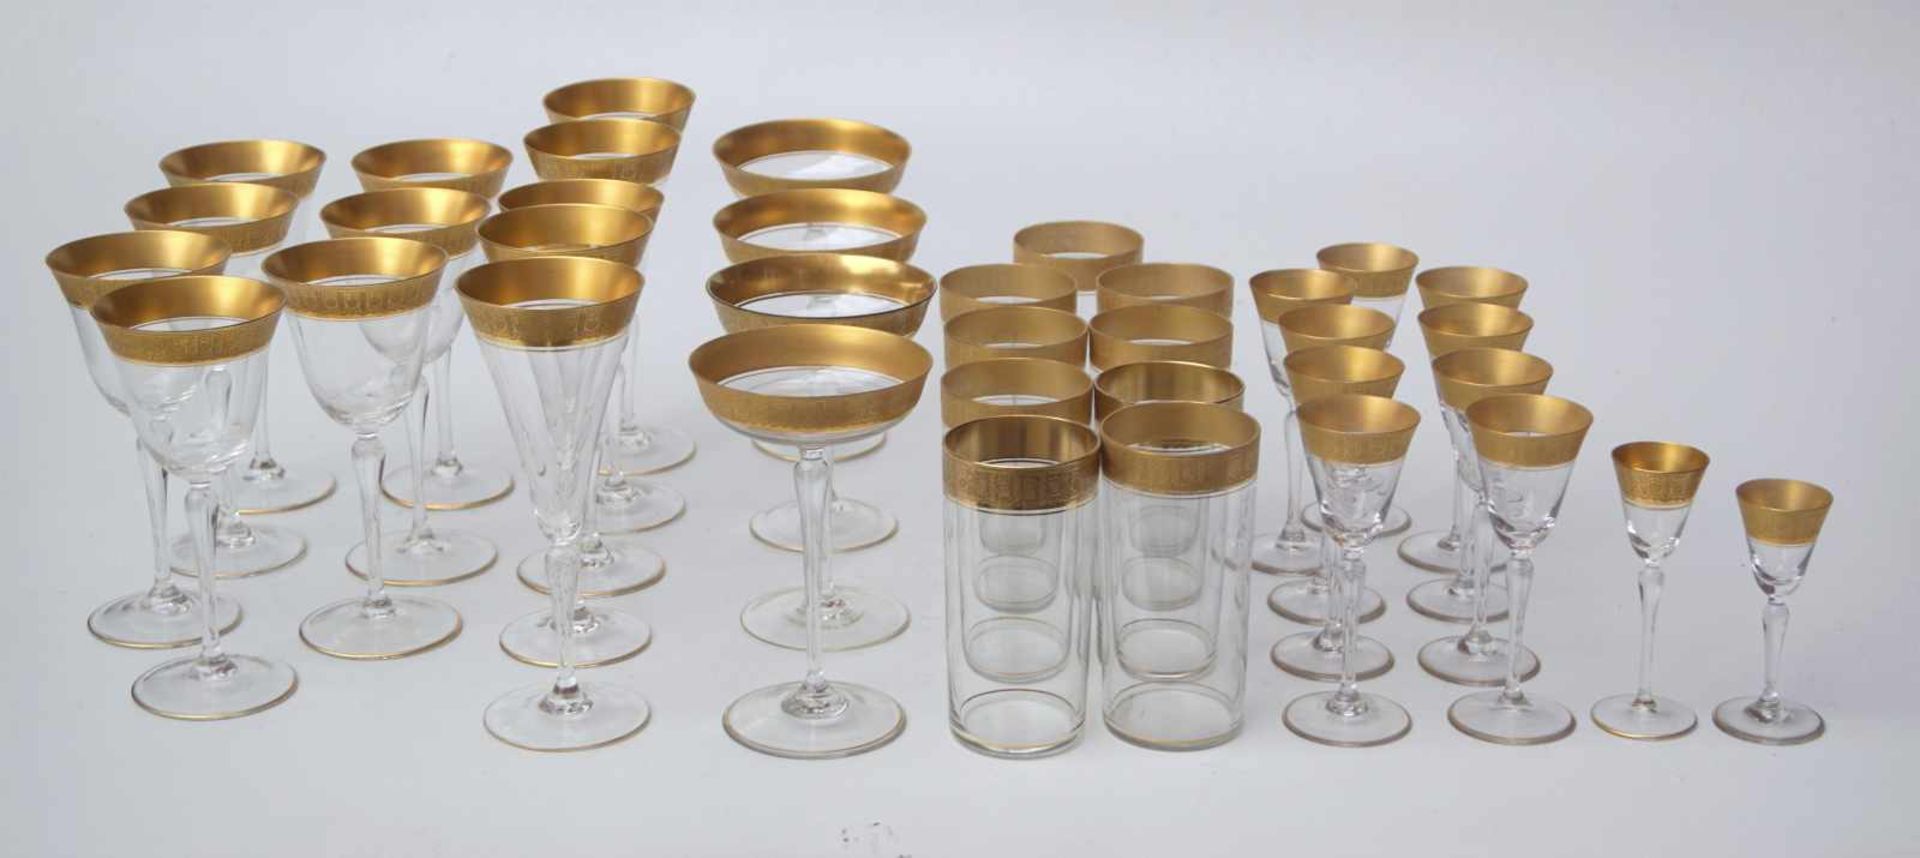 Theresienthal, Kristallglasmanufaktur: Große Trinkglasserie, Wein, Champagner usw.,